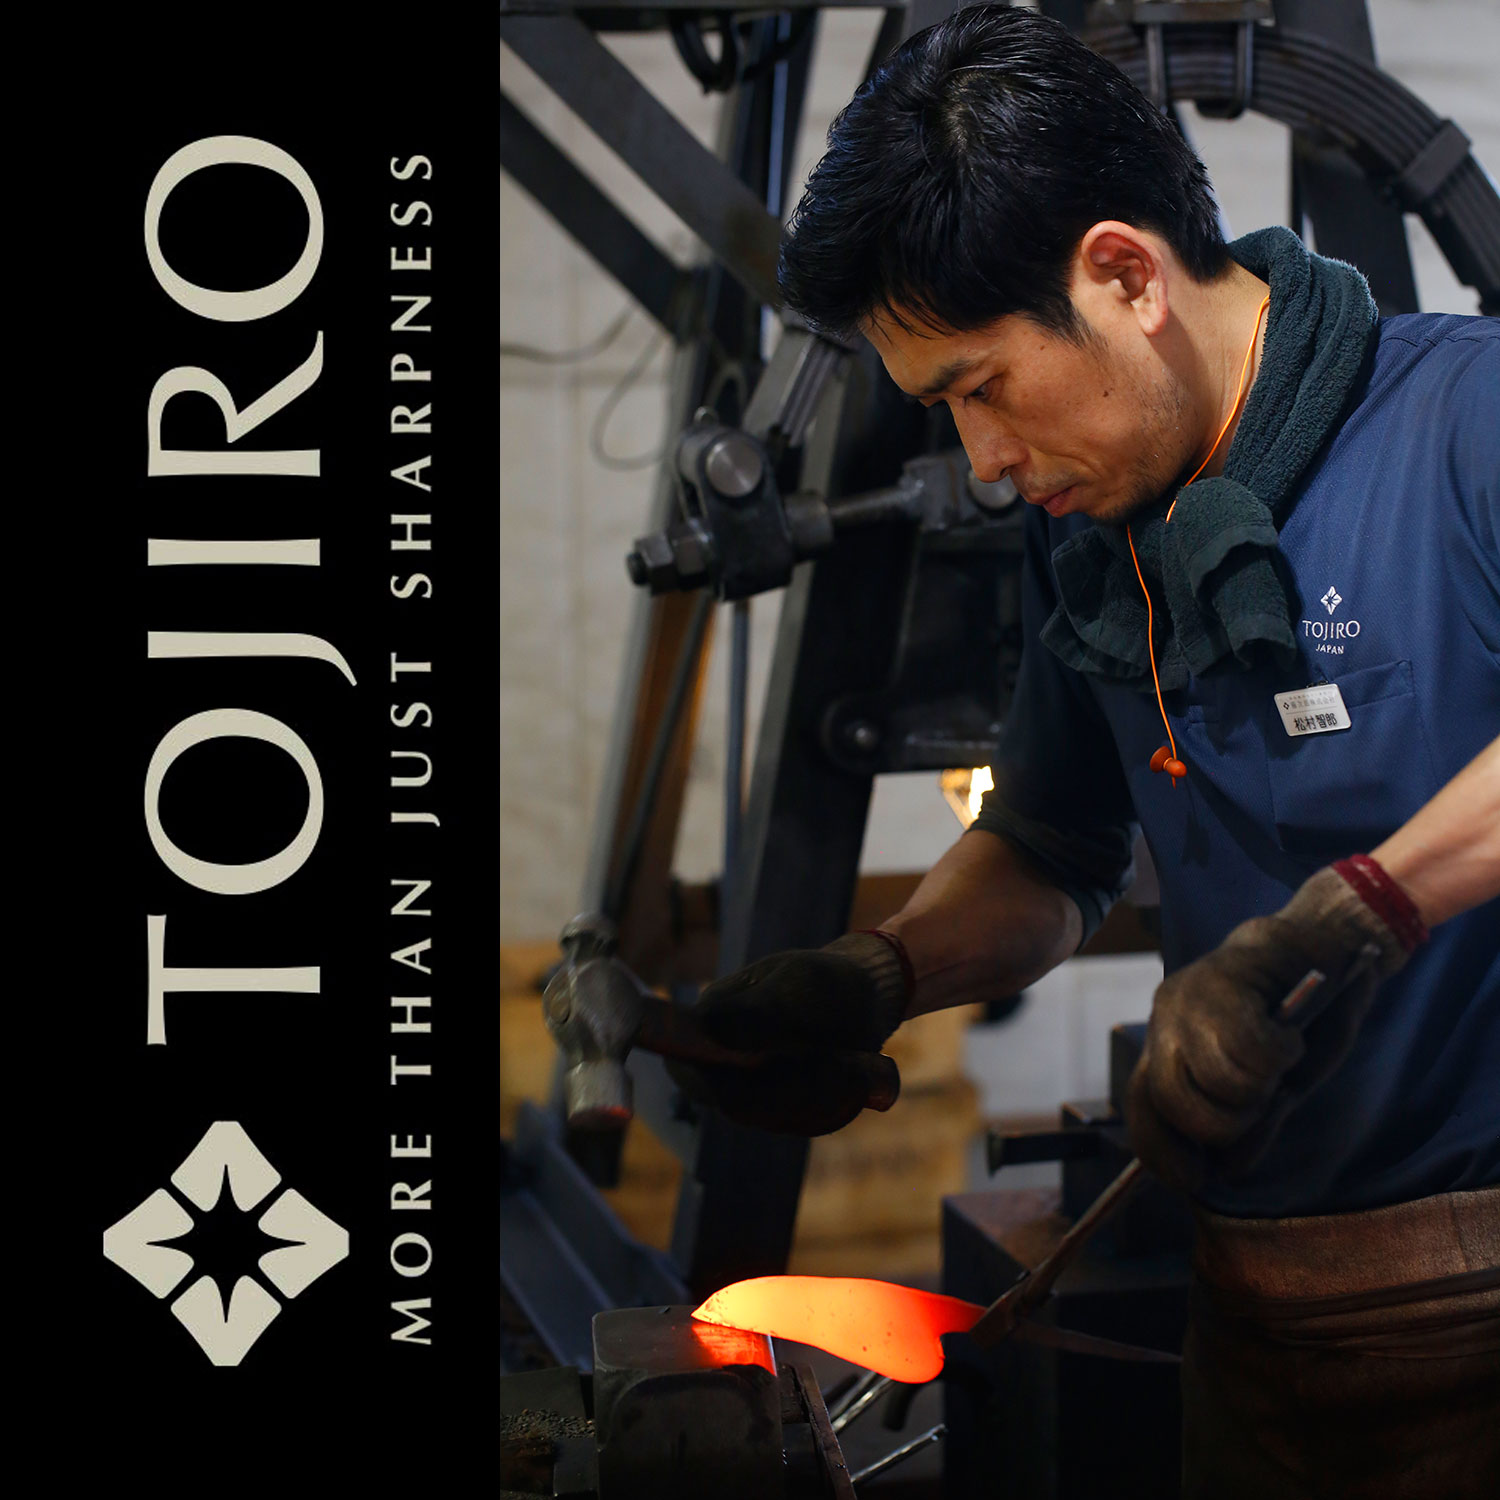 How Tojiro knives are made? Factory tour to Tojiro